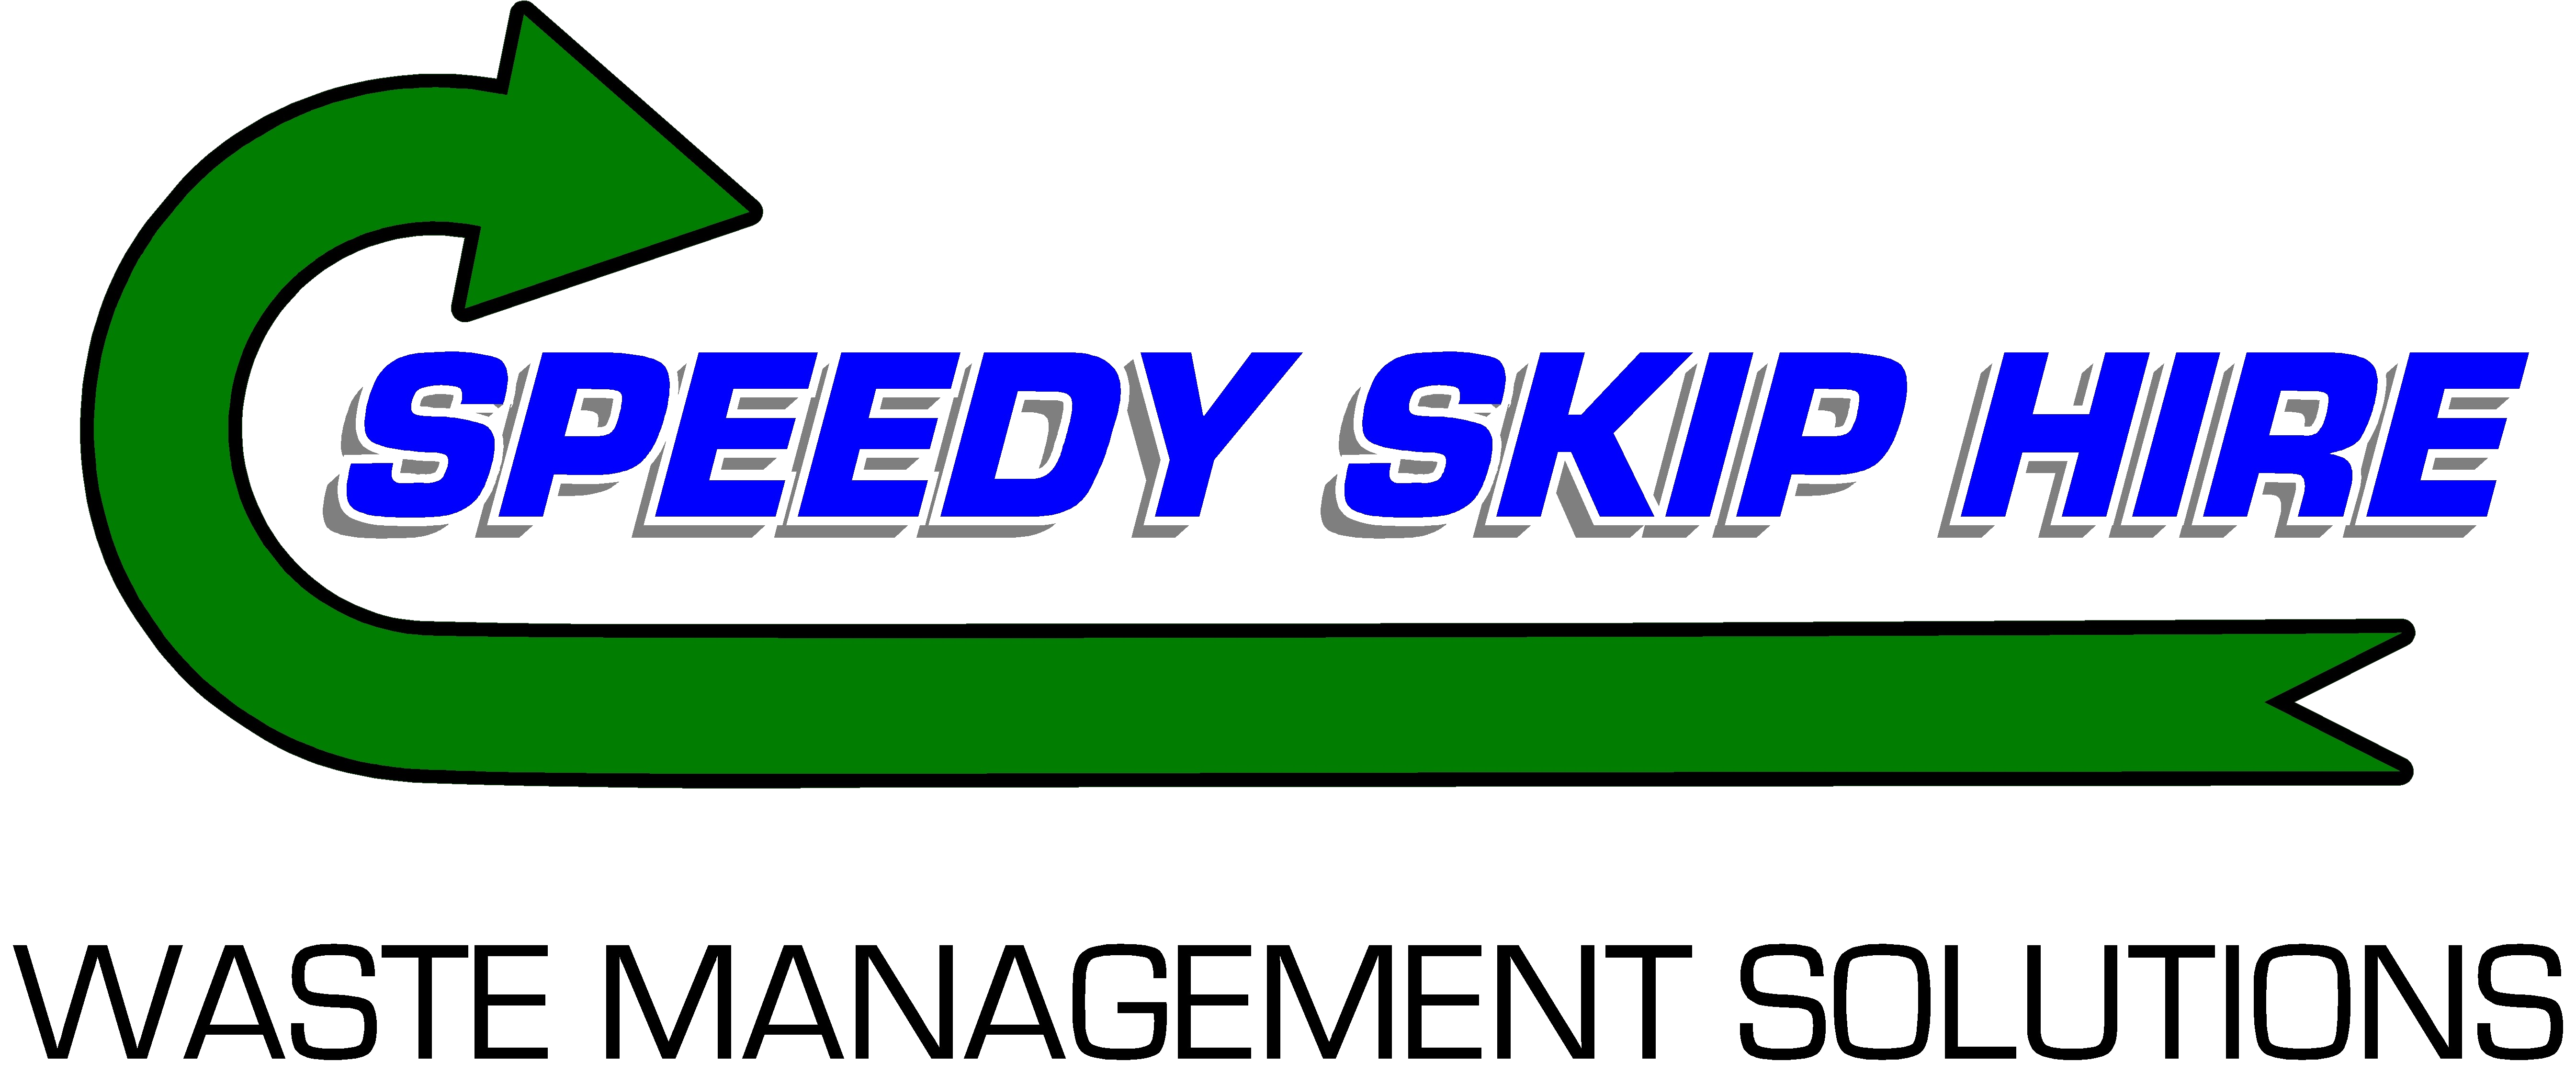 logo for Speedy Skip Hire Ltd